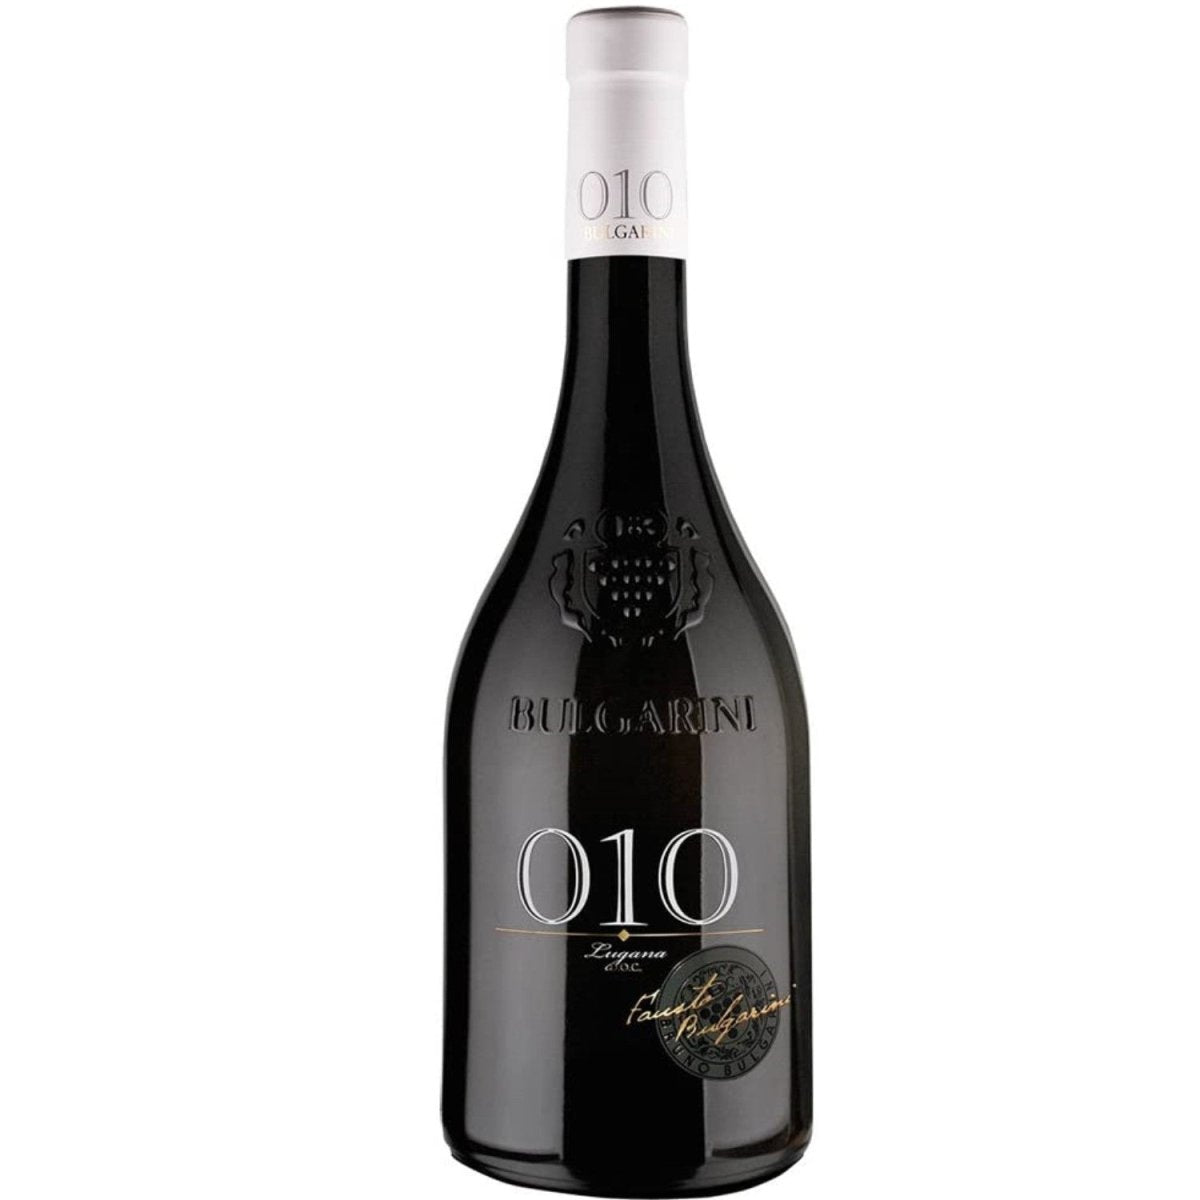 Cantina Bulgarini 010 Lugana DOC Weißwein Wein trocken Italien (6 x 0.75l) - Versanel -